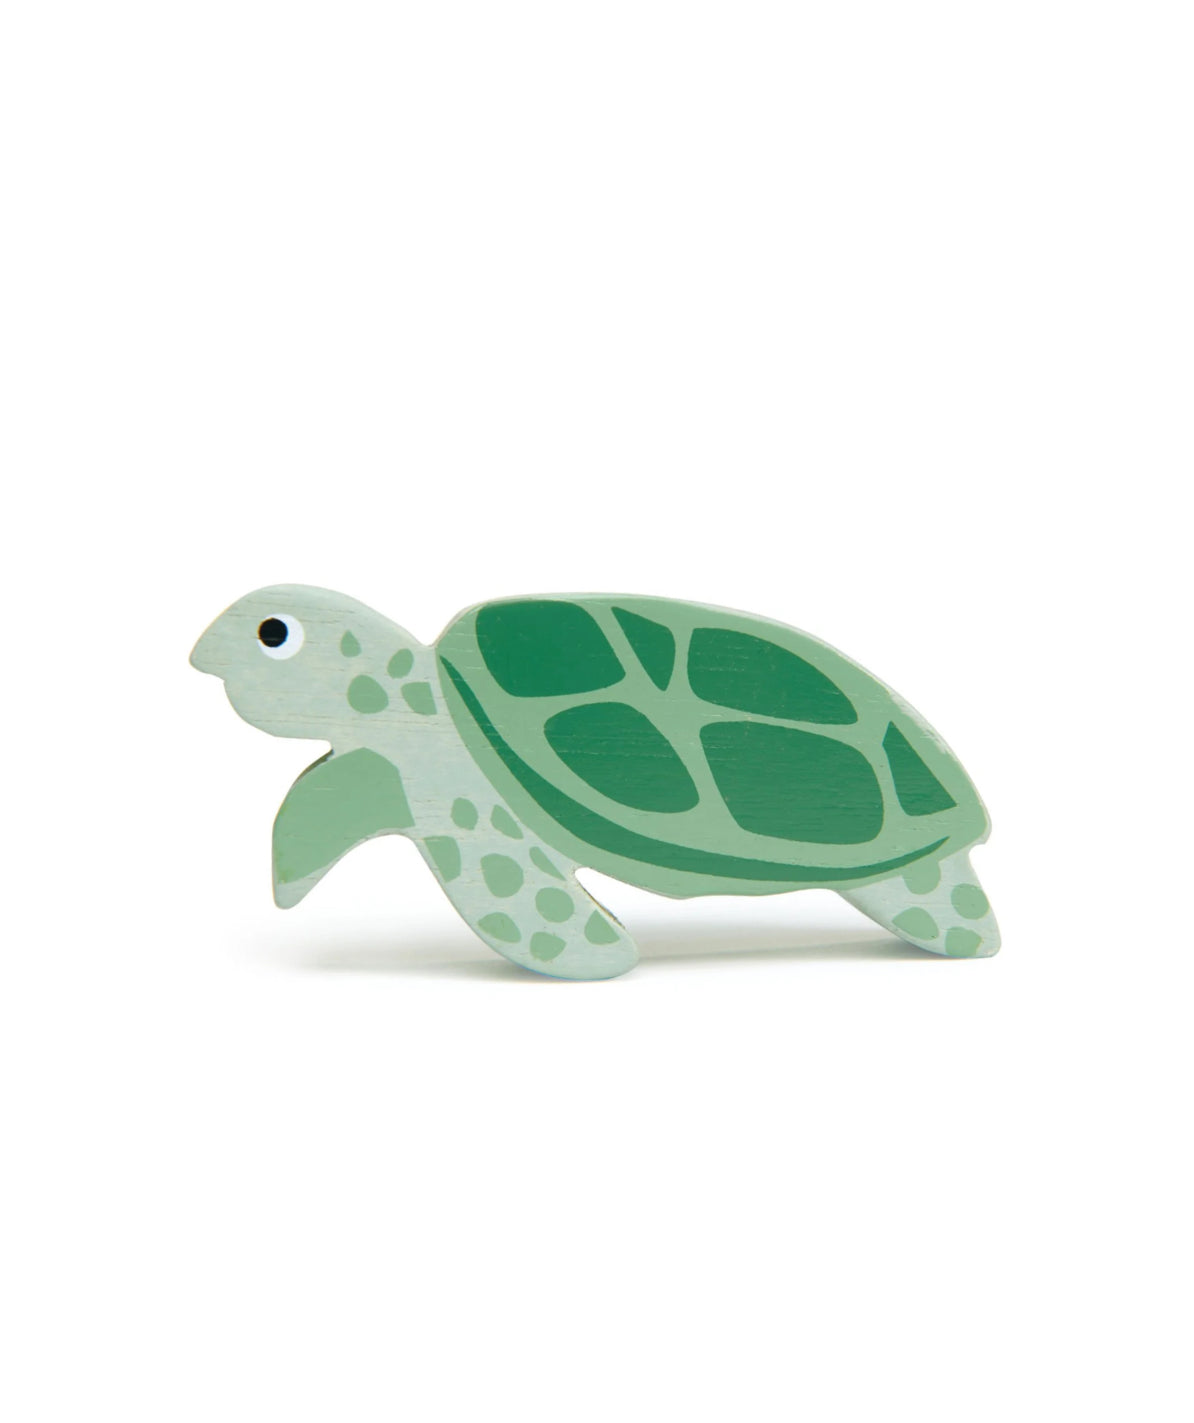 Tender Leaf Toys Turtle Wooden Toy